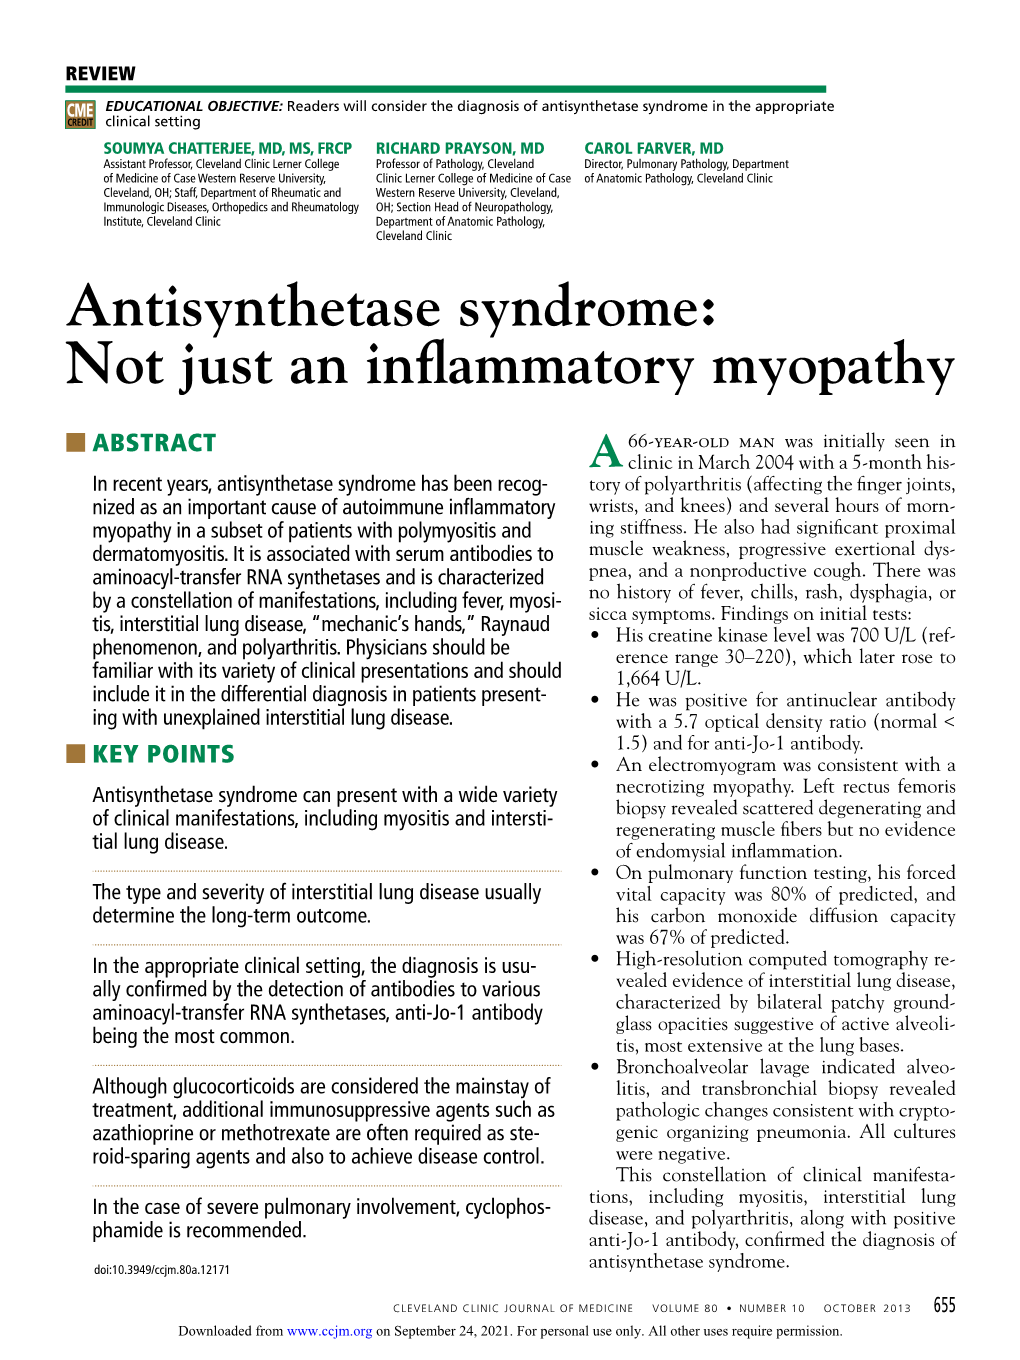 Antisynthetase Syndrome: Not Just an Inflammatory Myopathy